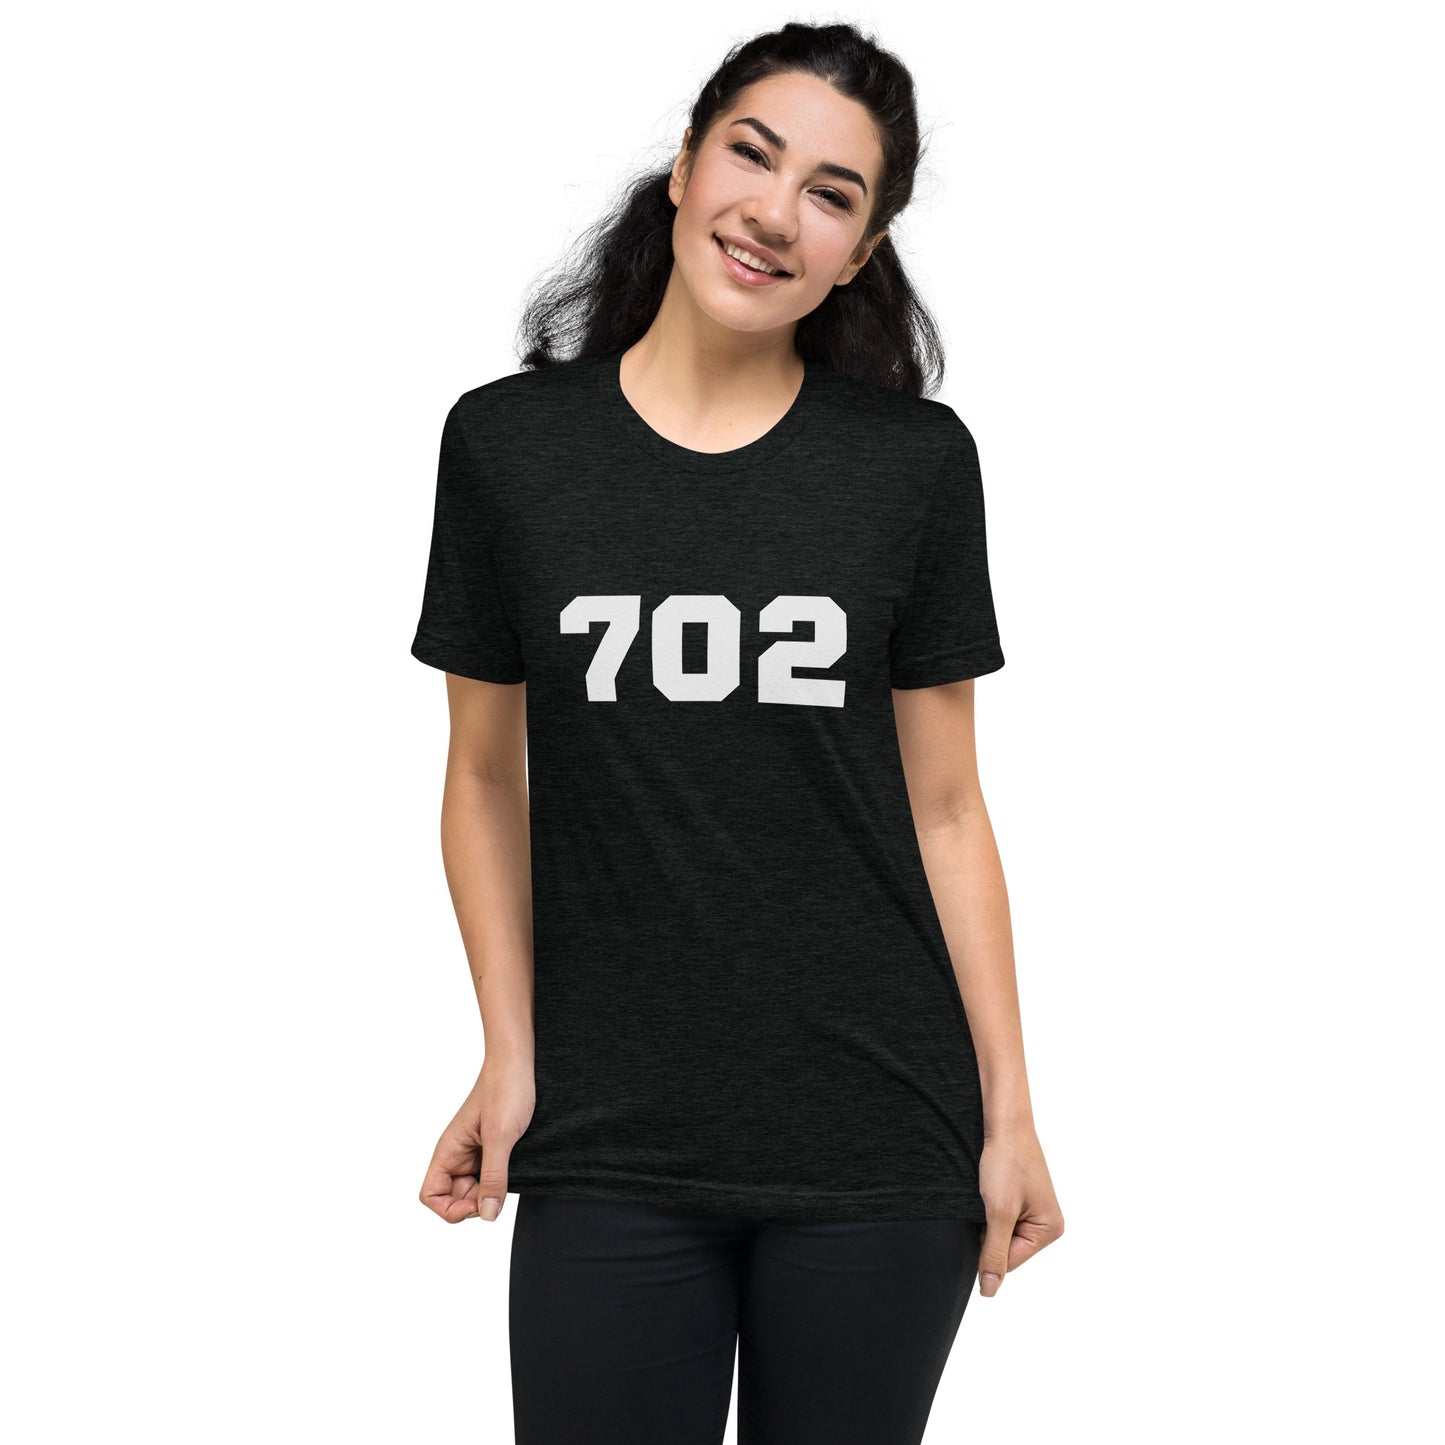 702 Las Vegas Short Sleeve Tri-blend T-Shirt